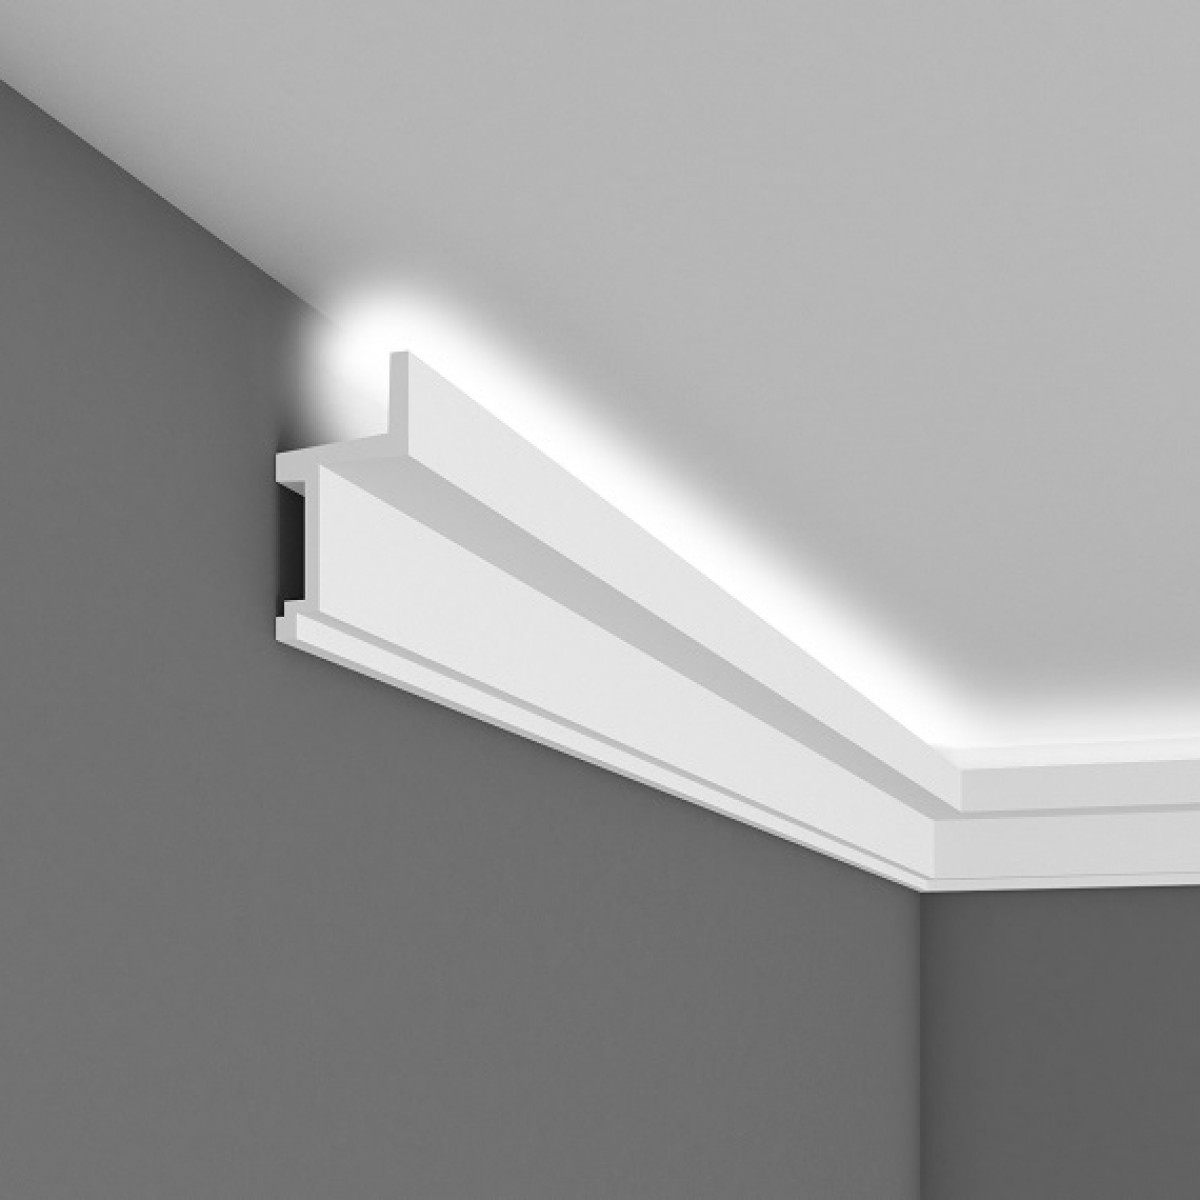 Scafe tavan (iluminat indirect, LED) Mardom Decor MRD-MDB115, material: ProFoam